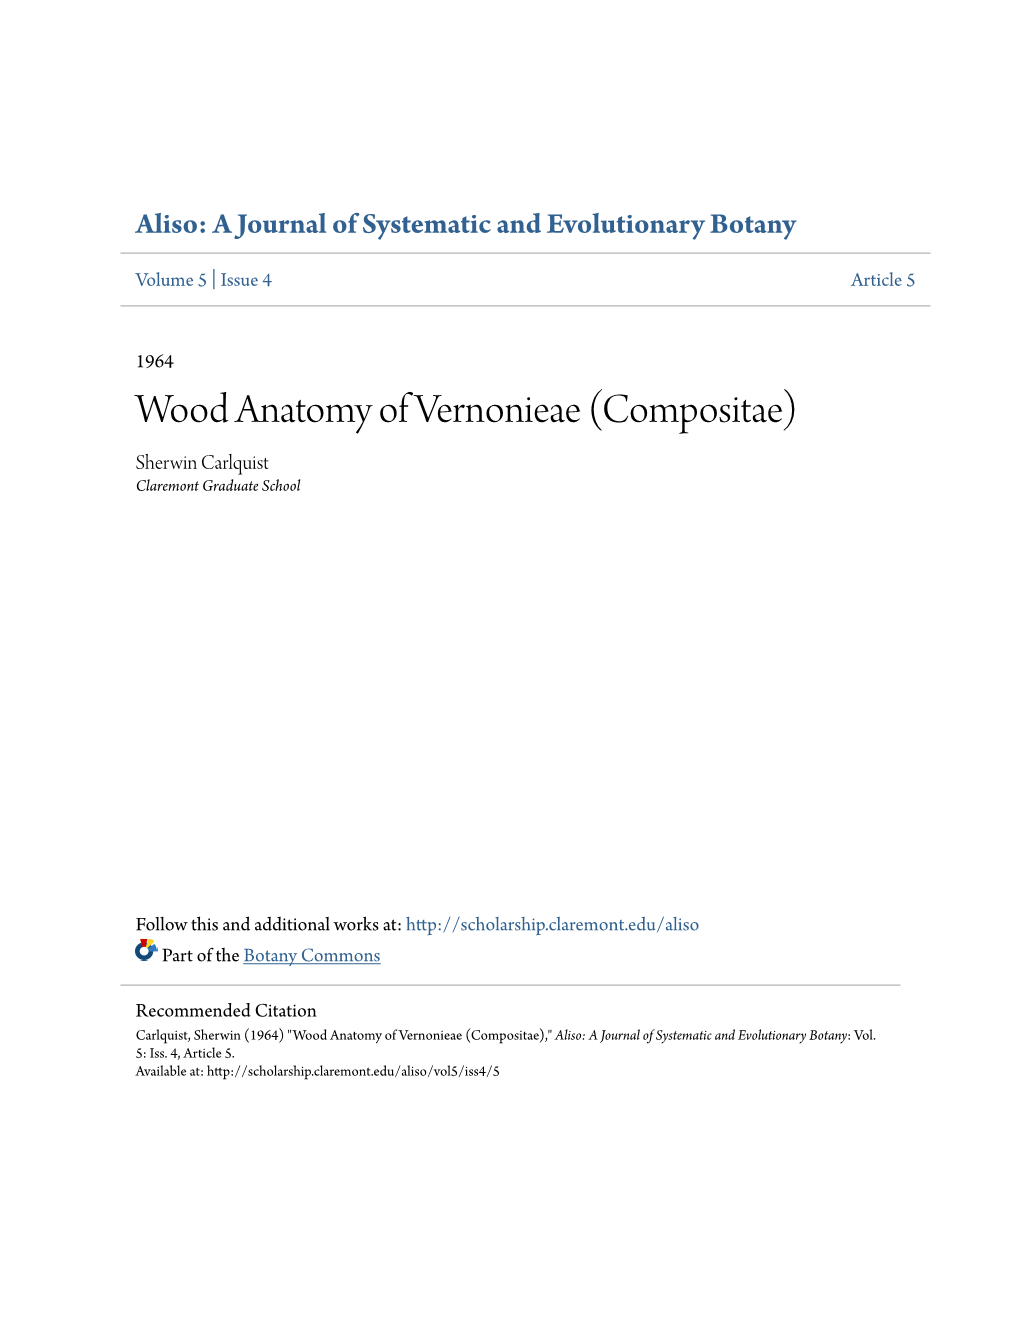 Wood Anatomy of Vernonieae (Compositae) Sherwin Carlquist Claremont Graduate School